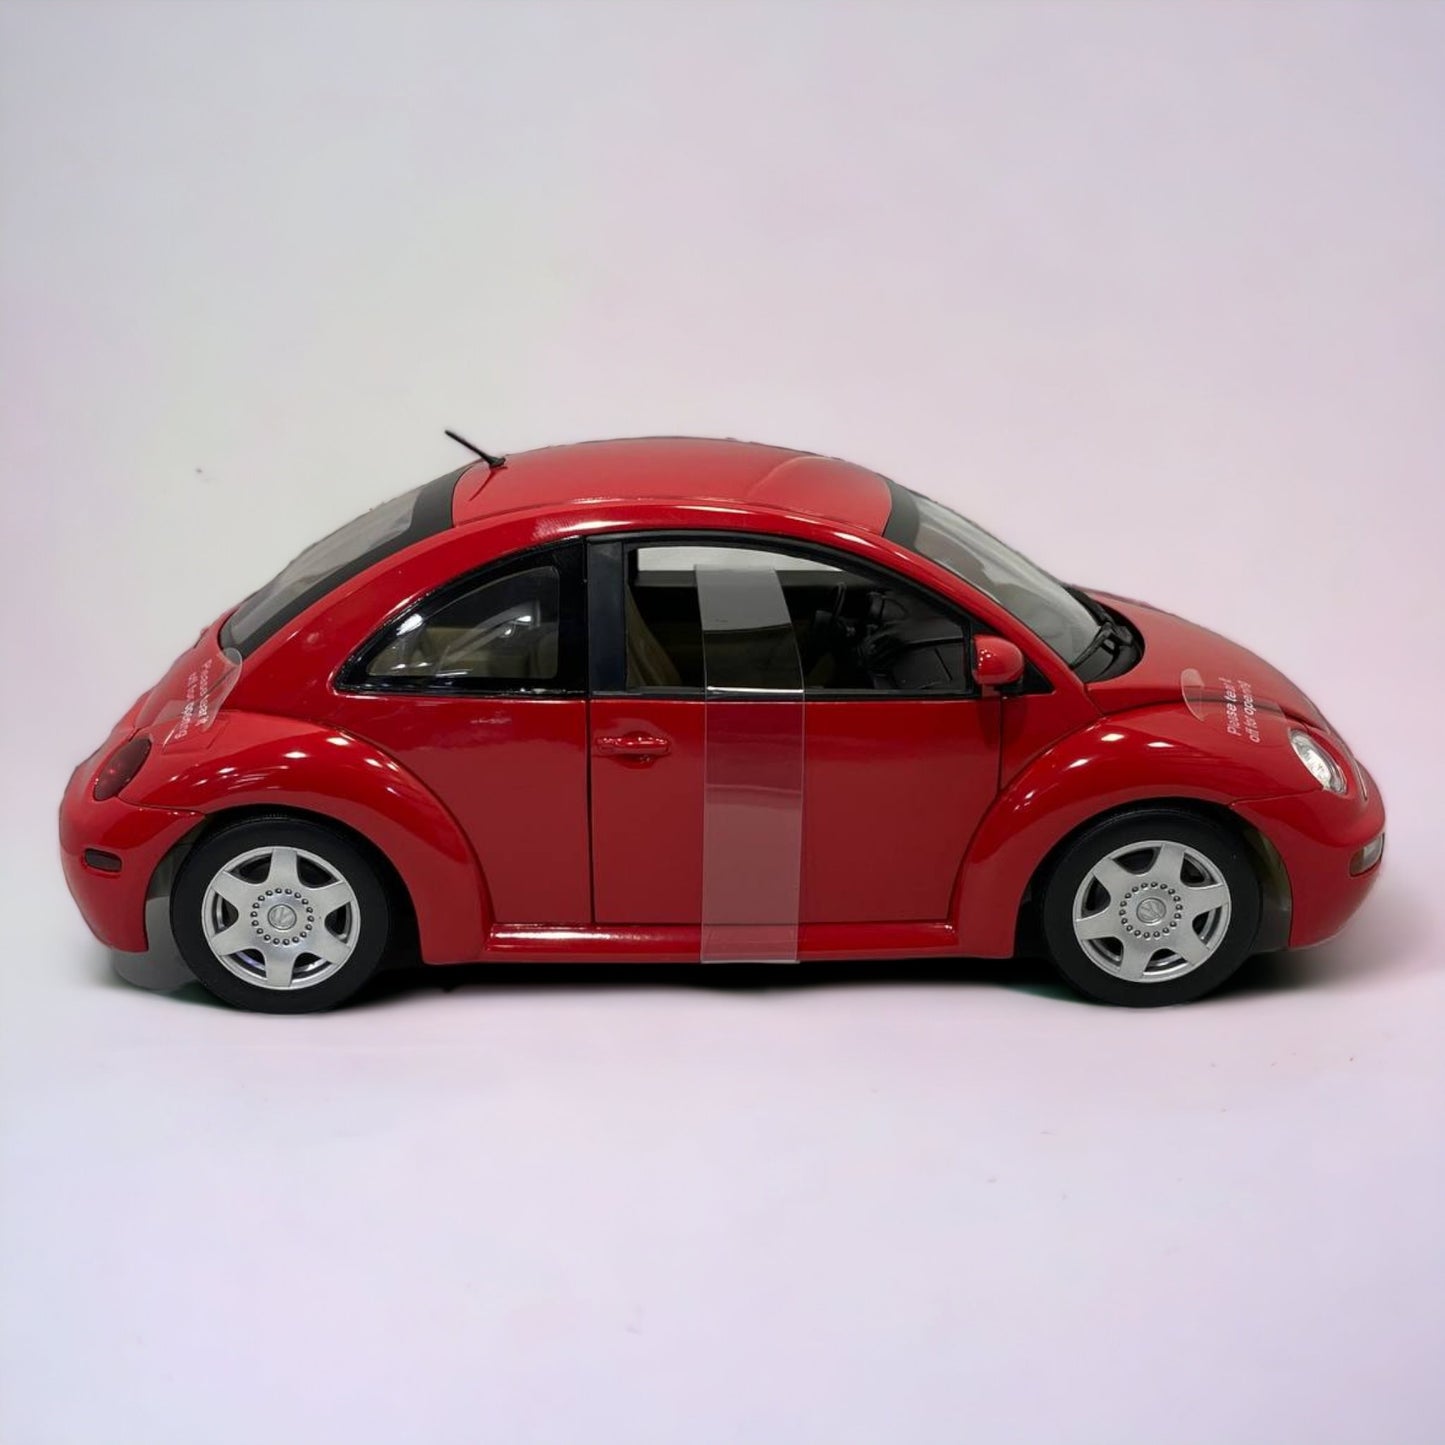 1/18 GATE G Volkswagen BEETLE COUPE RED Model Car|Sold in Dturman.com Dubai UAE.